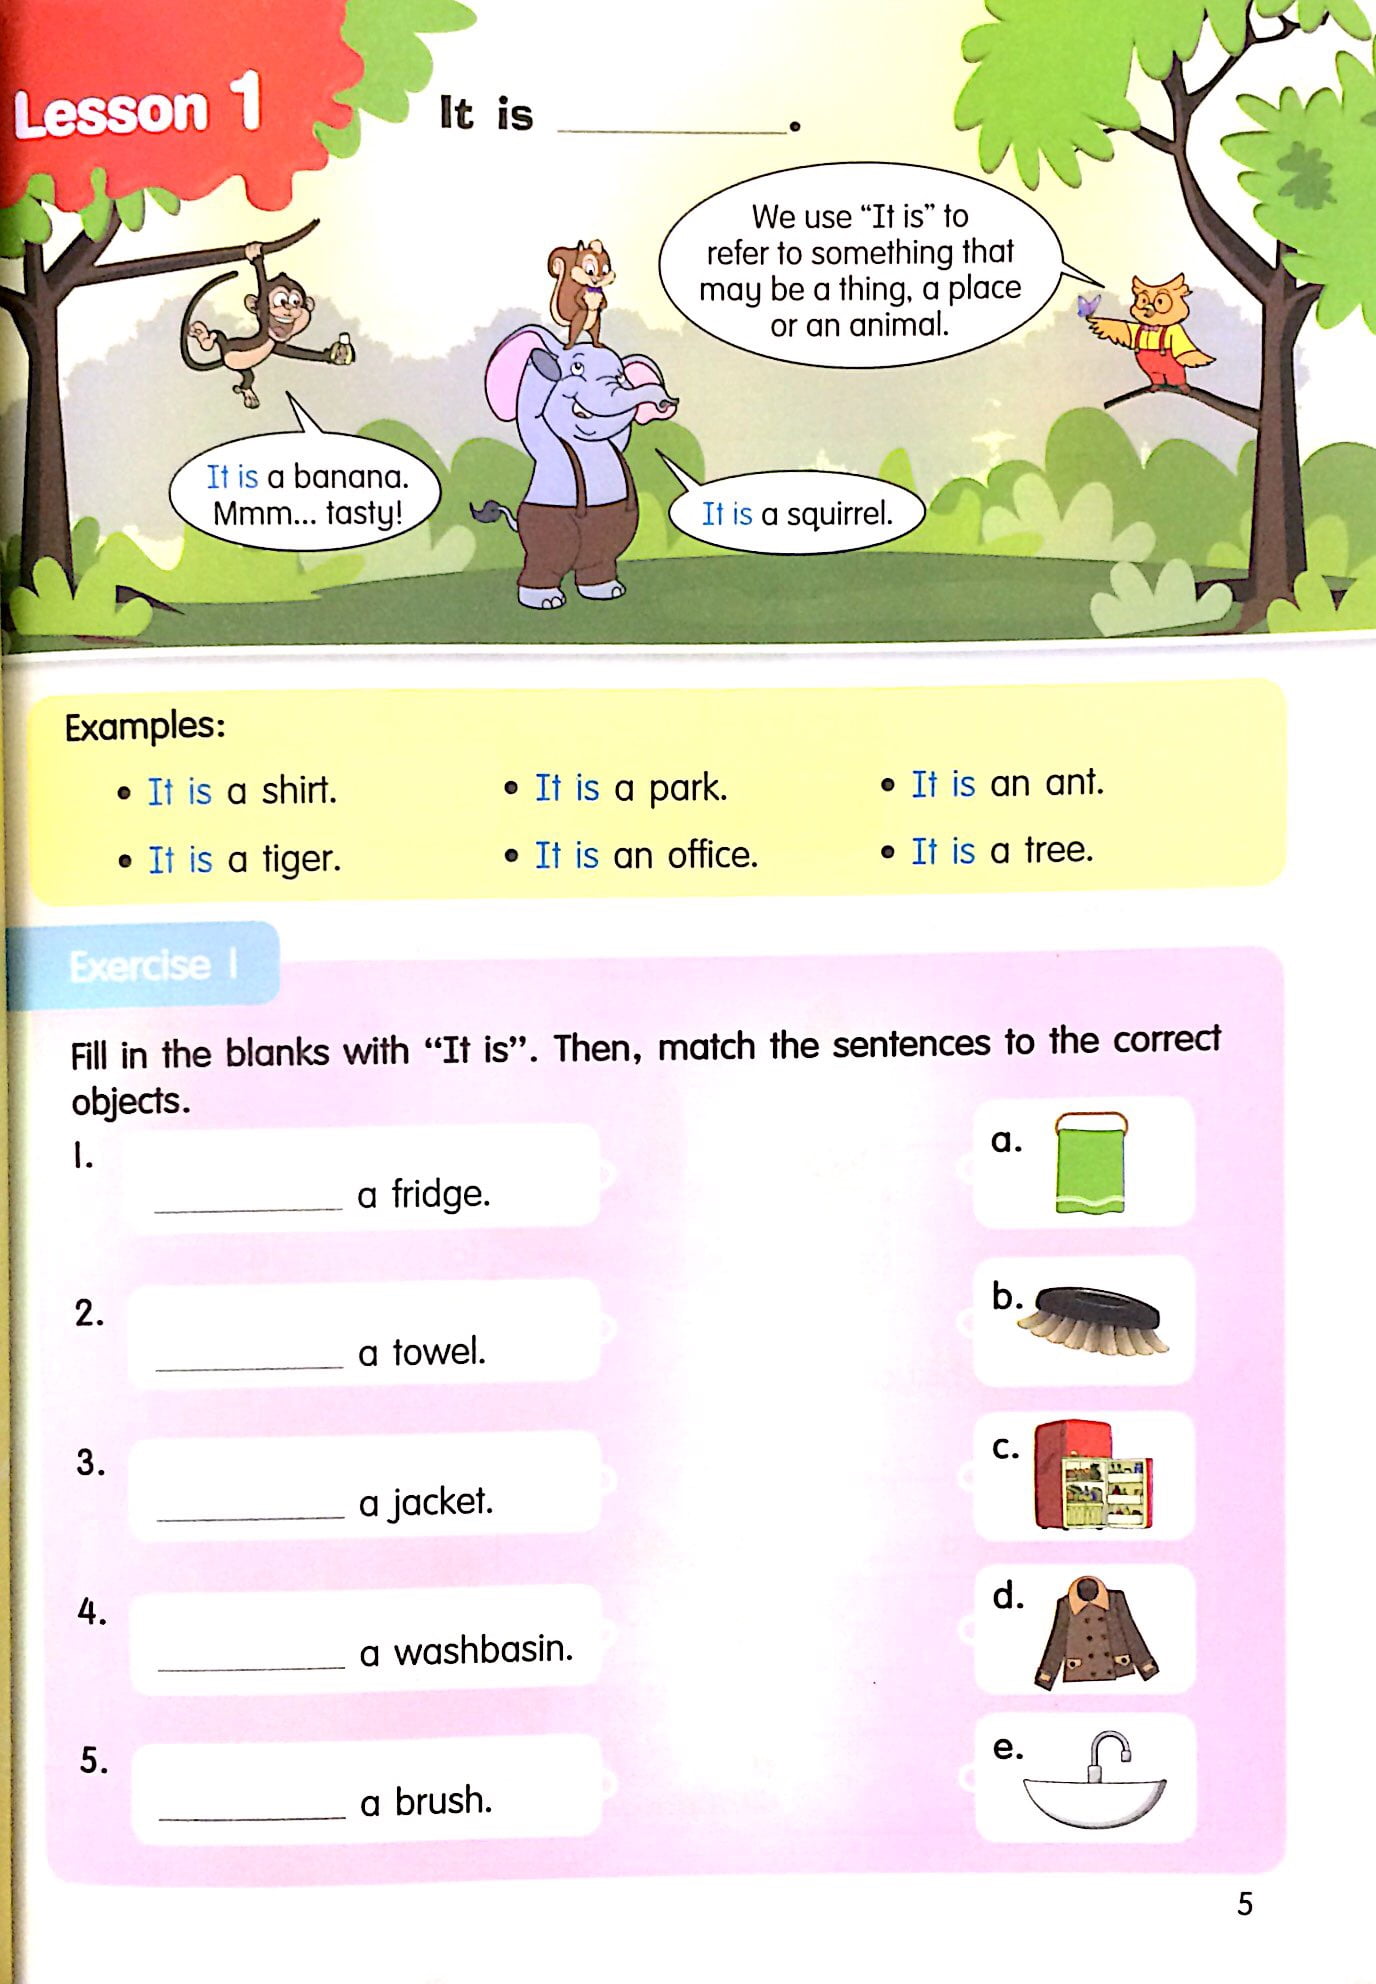 Exploring Grammar - Step By Step - Book 2 PDF